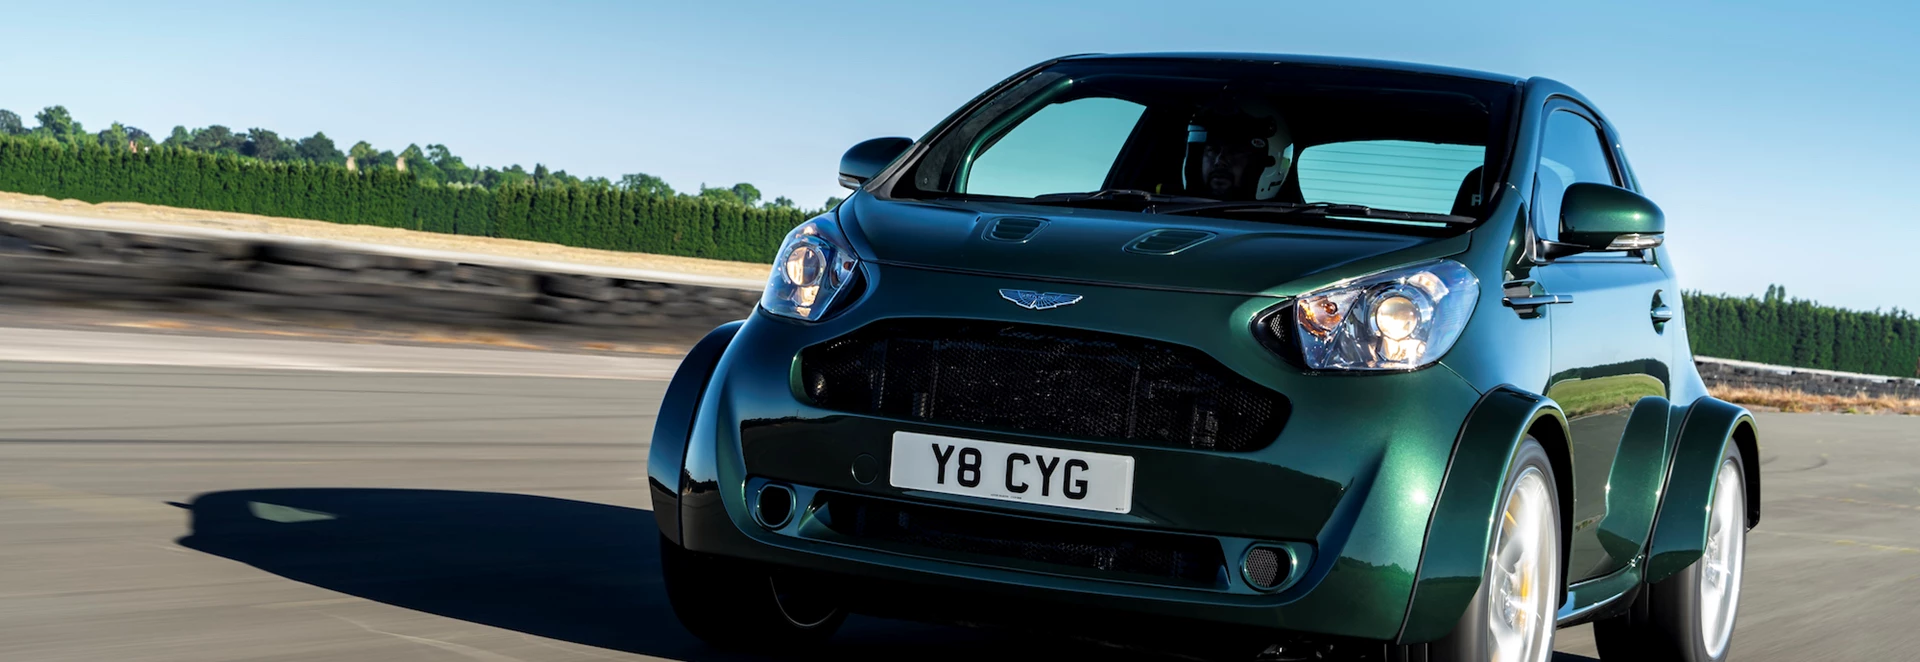 Aston Martin reveals one-off V8 Cygnet